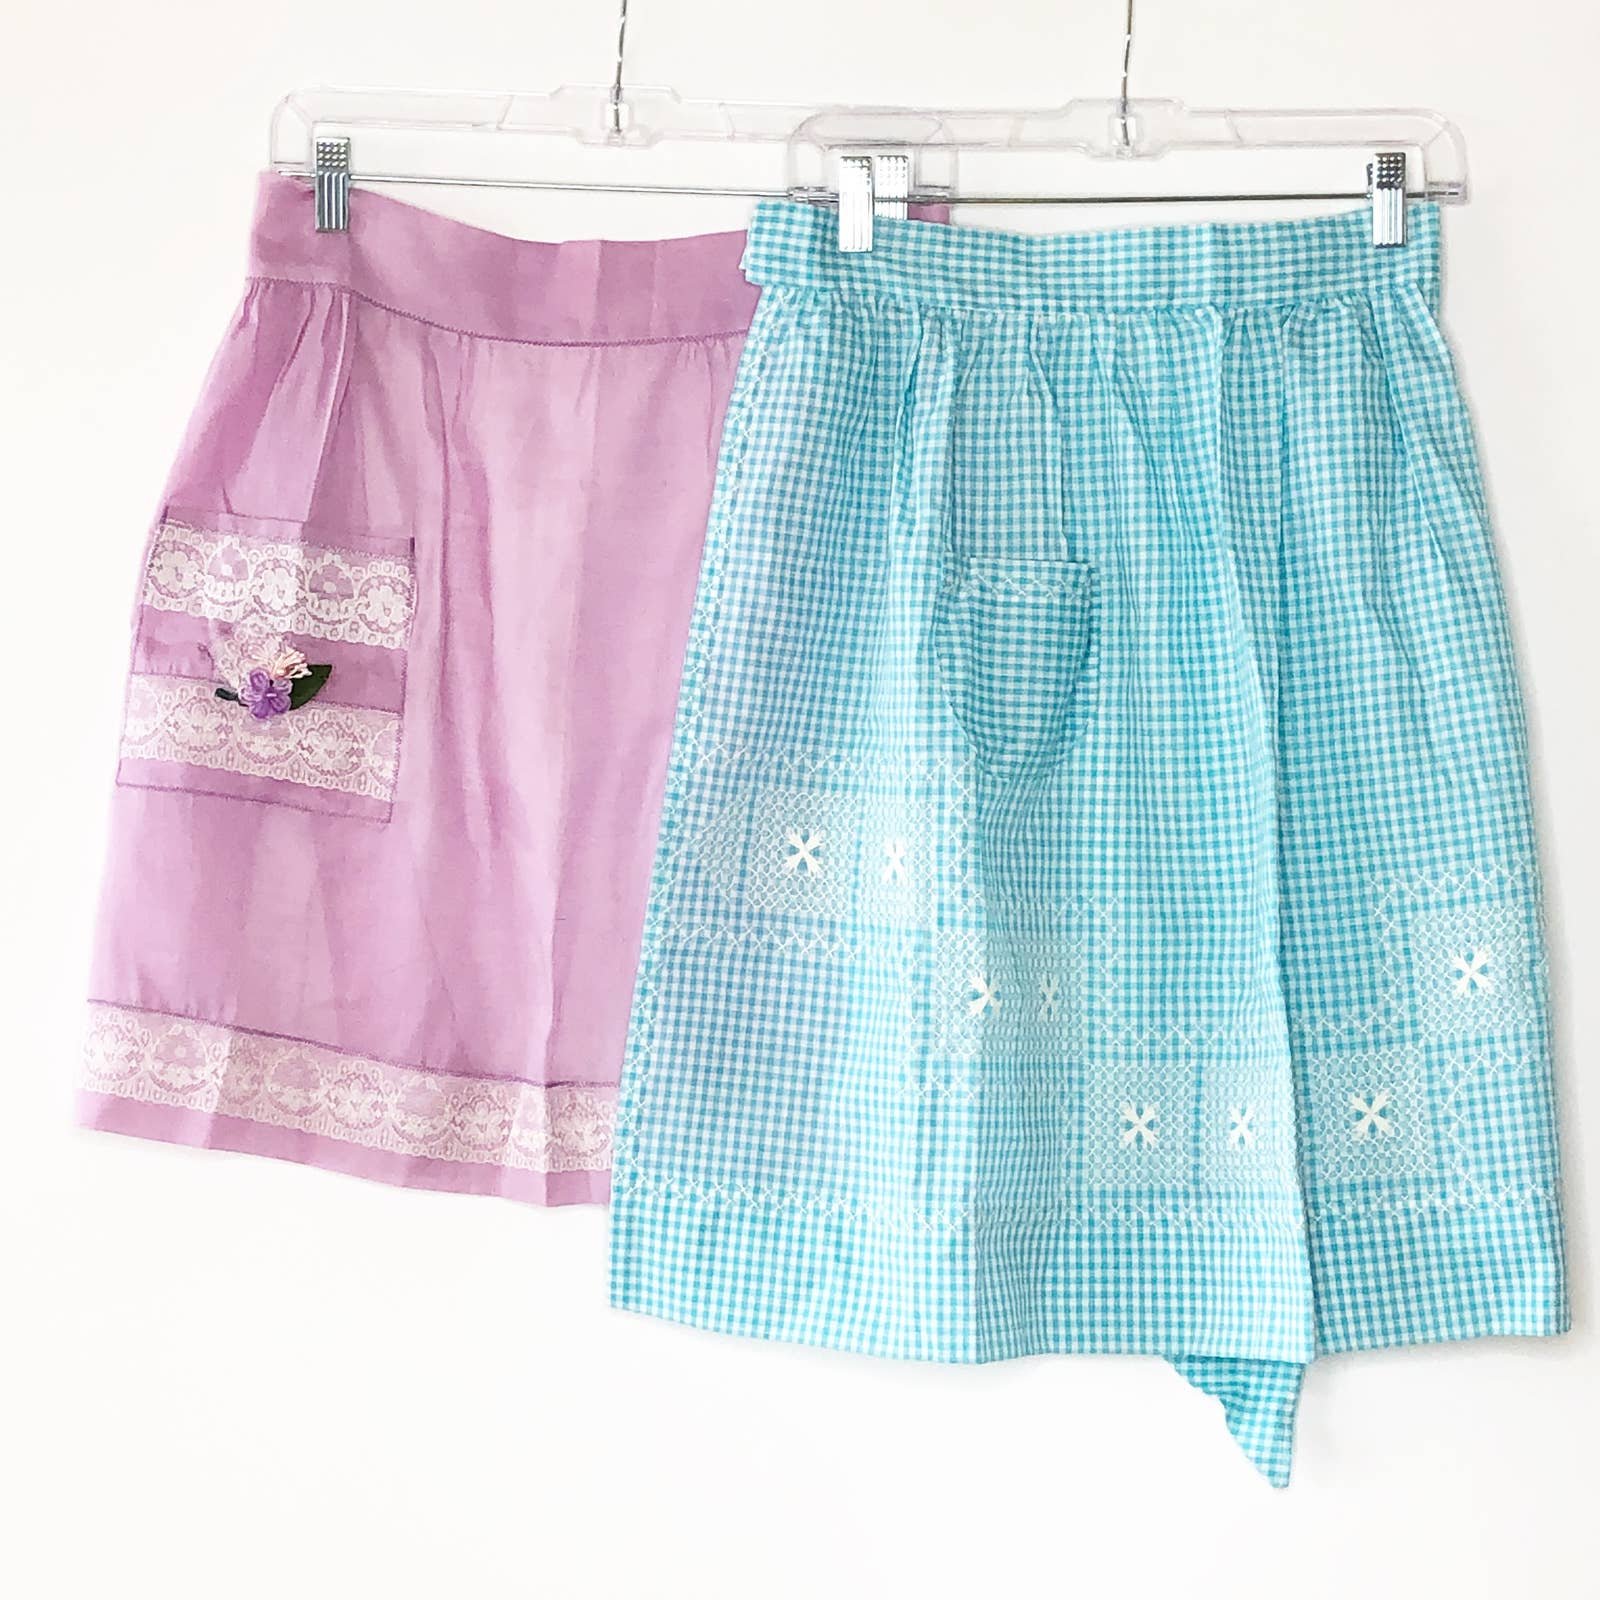 Vintage Apron Set Pink & Blue Gingham Lace & Embroidery Half apron Hostess BwDExSsEu